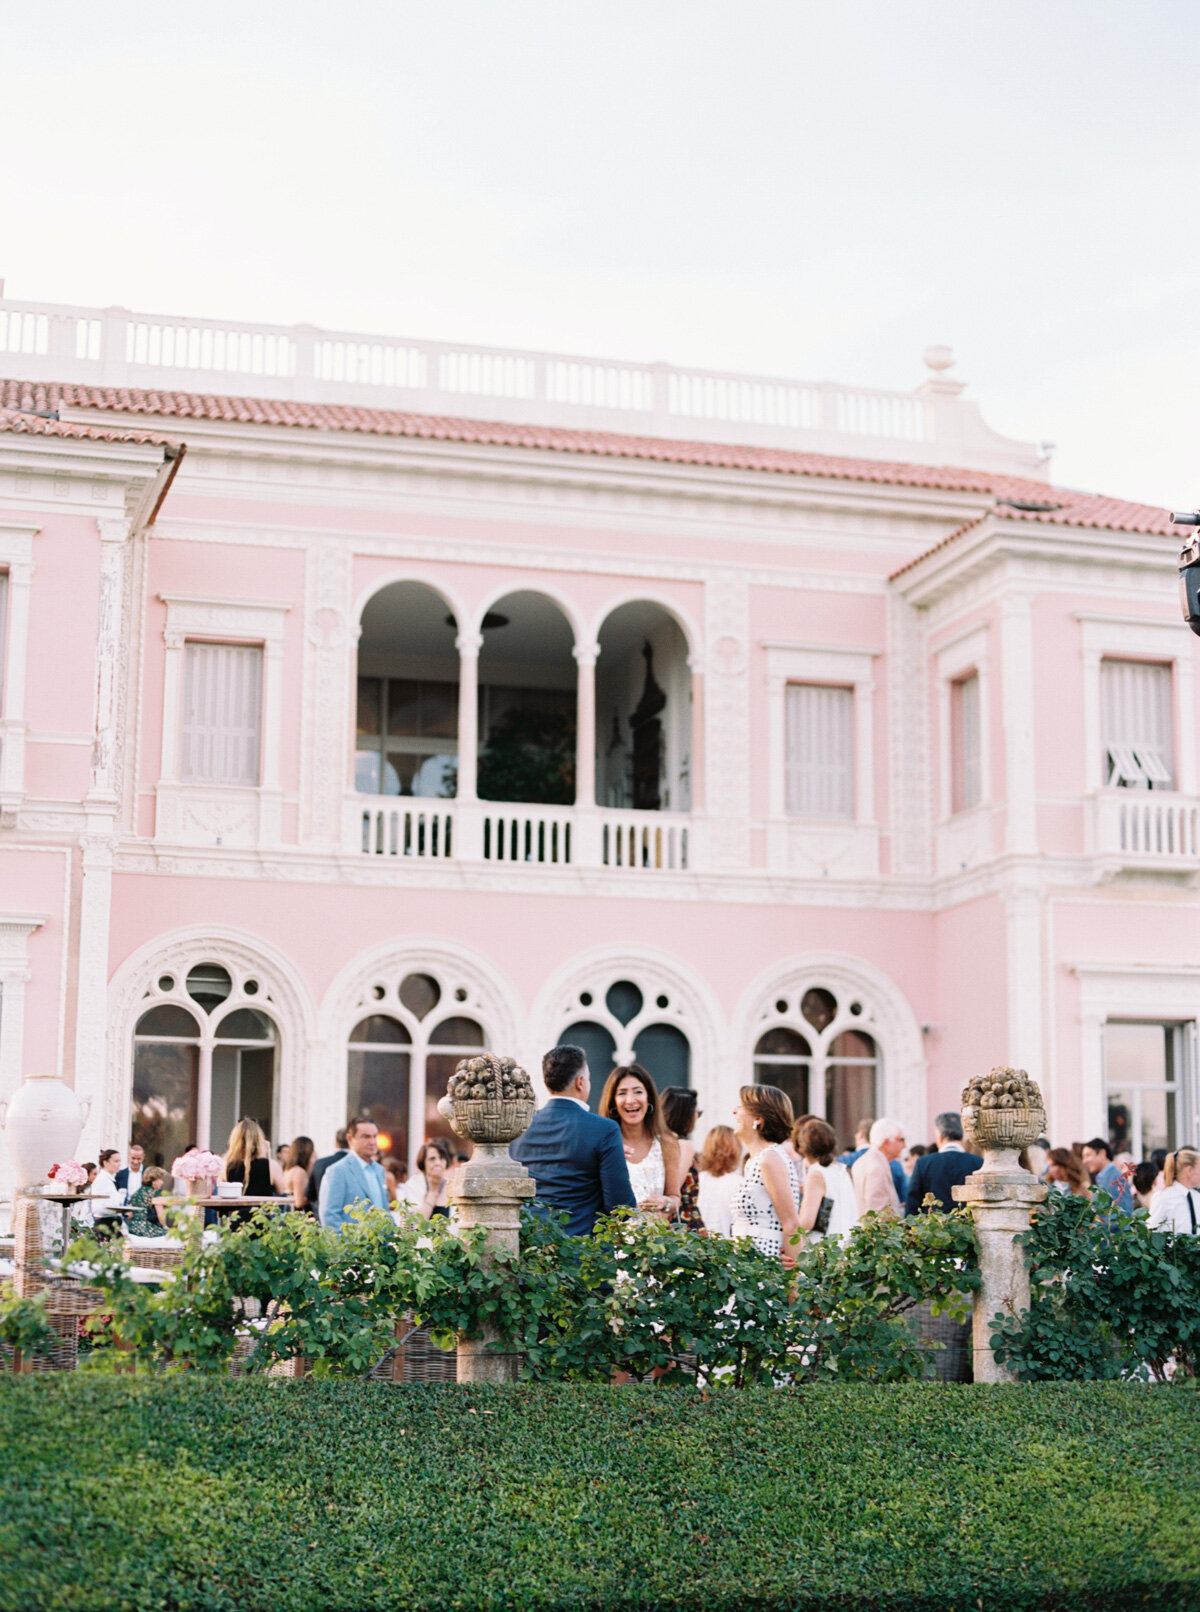 Villa-Ephrussi-de-Rothschild-Monaco-Nice-Saint Tropez-Welcome-Dinner-Katie-Grant-destination-wedding (35 of 37).jpg